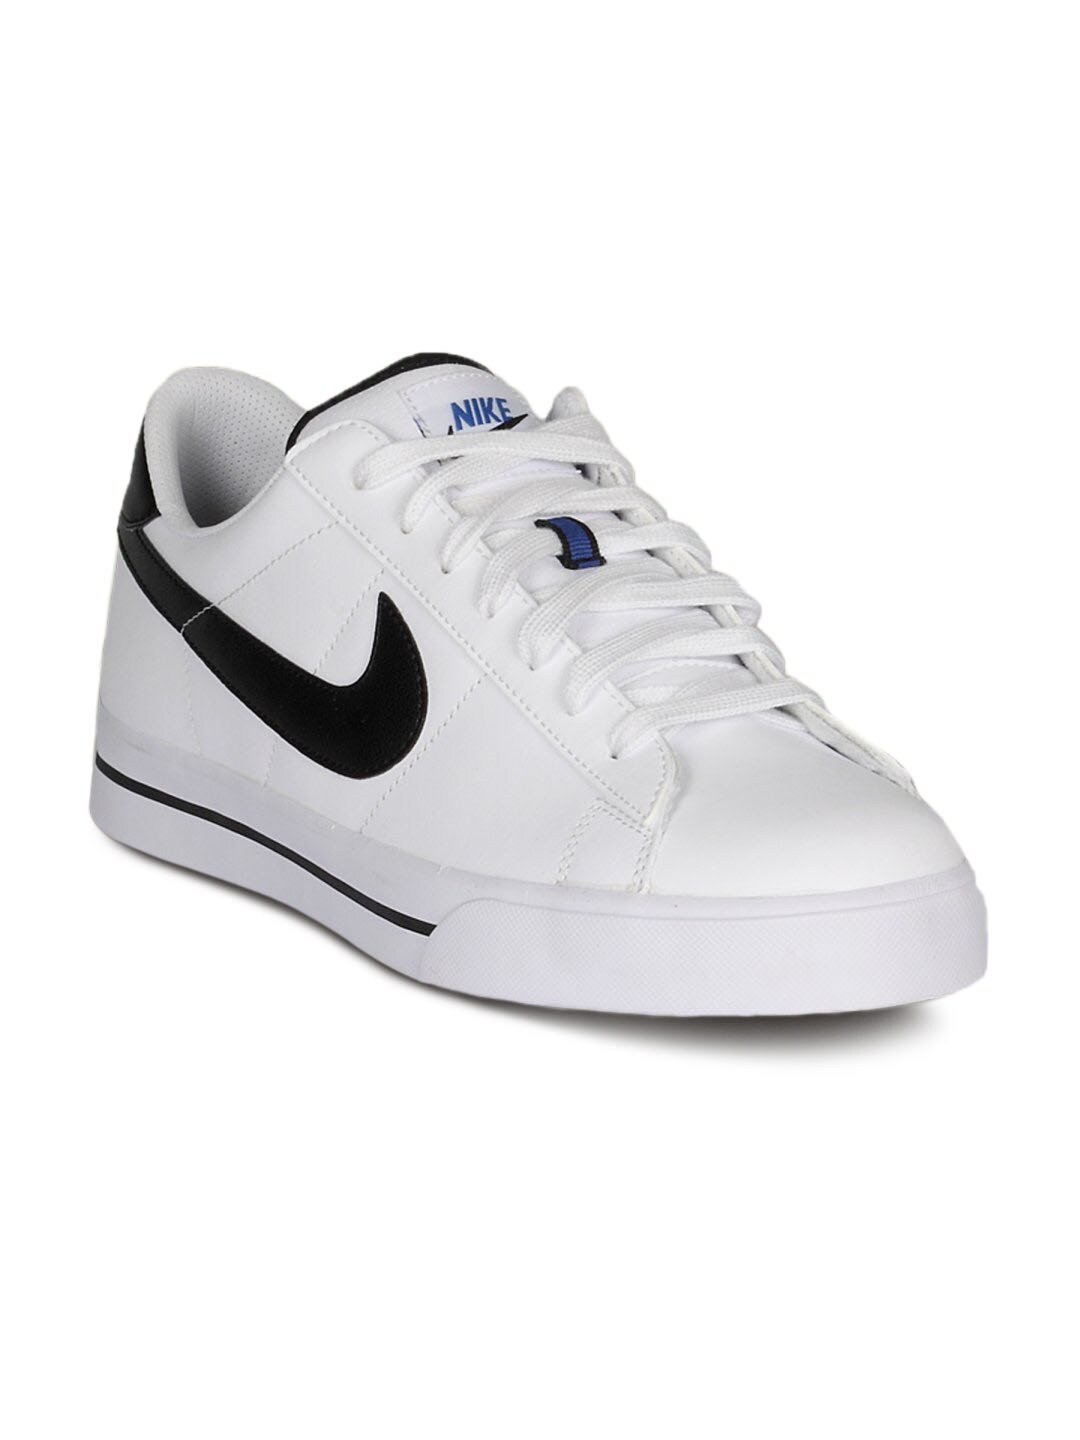 Nike Men's Sweet Classic Leather White Black Shoe